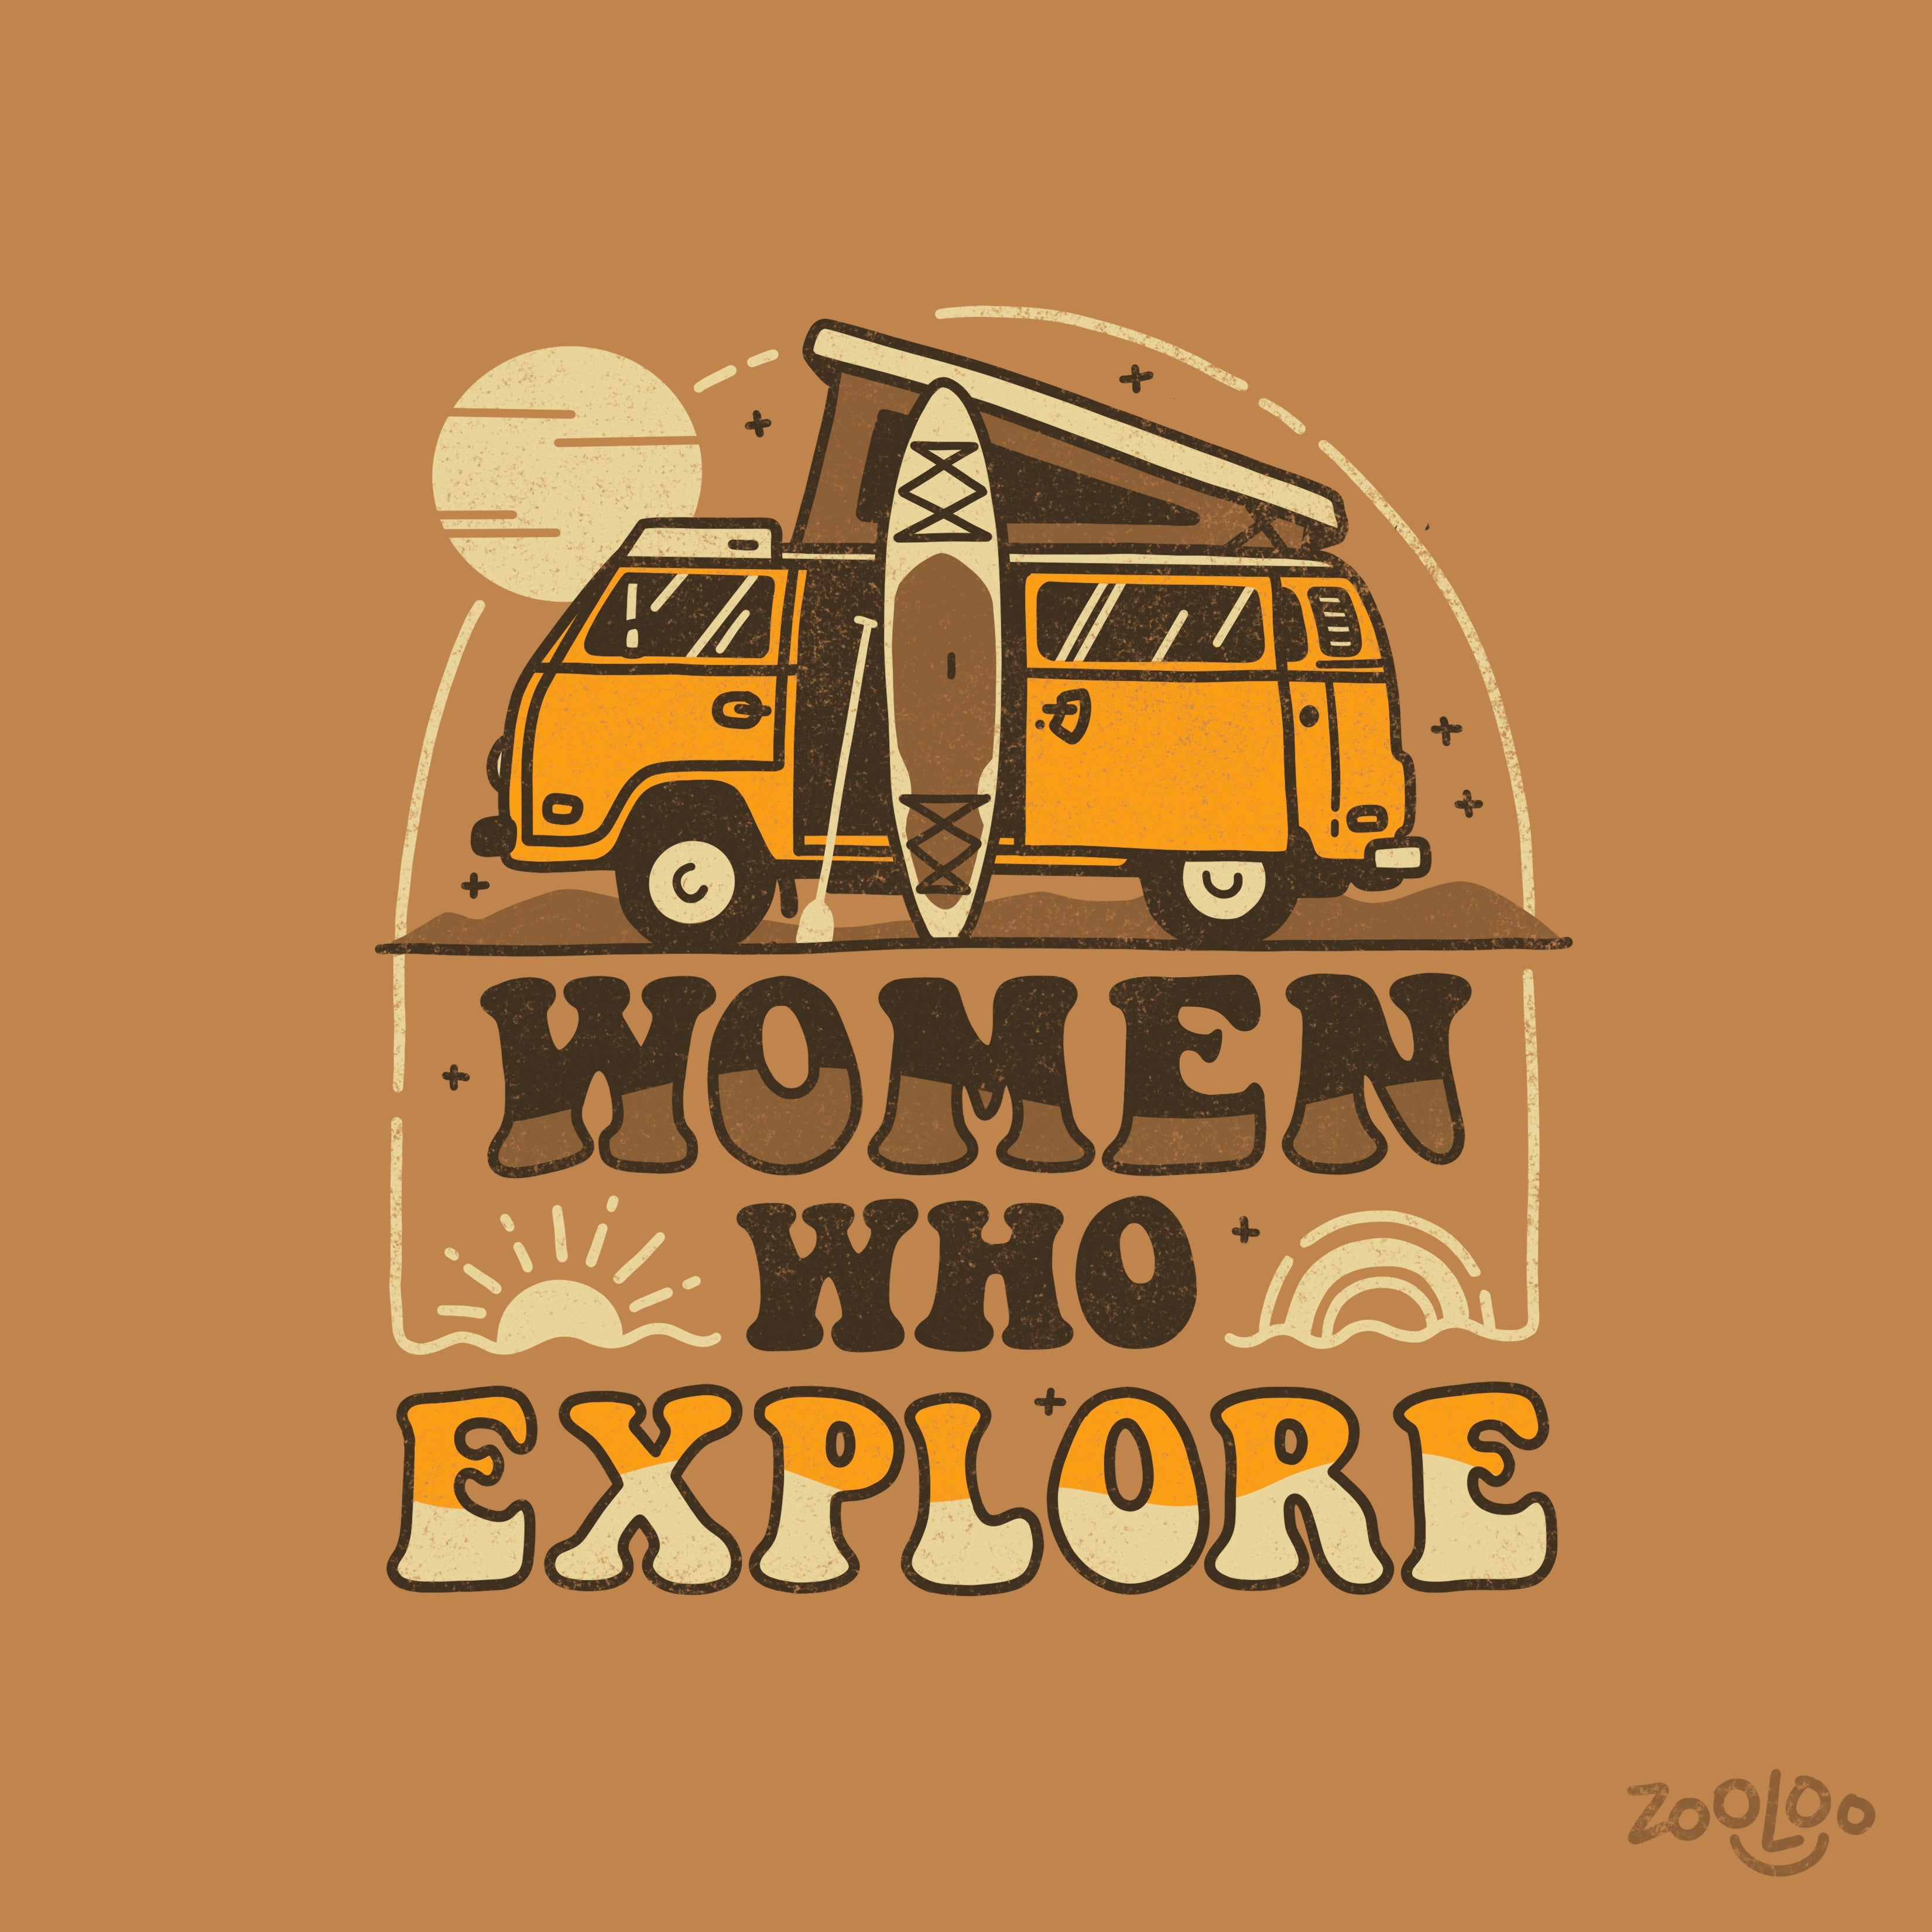 Women Who Explore